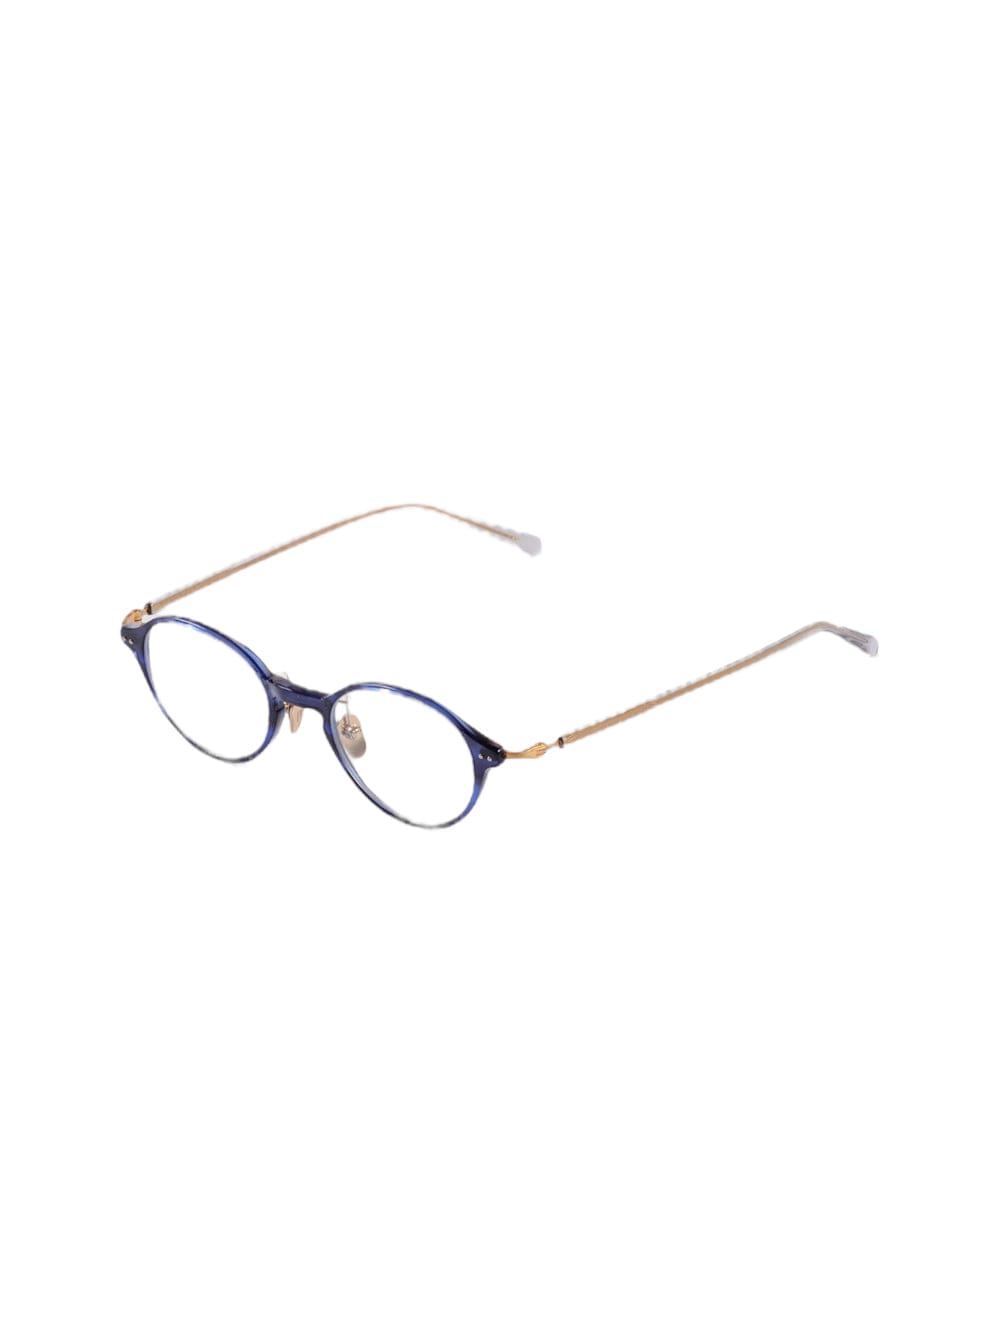 Masunaga Gms 830 - Blue Navy Glasses